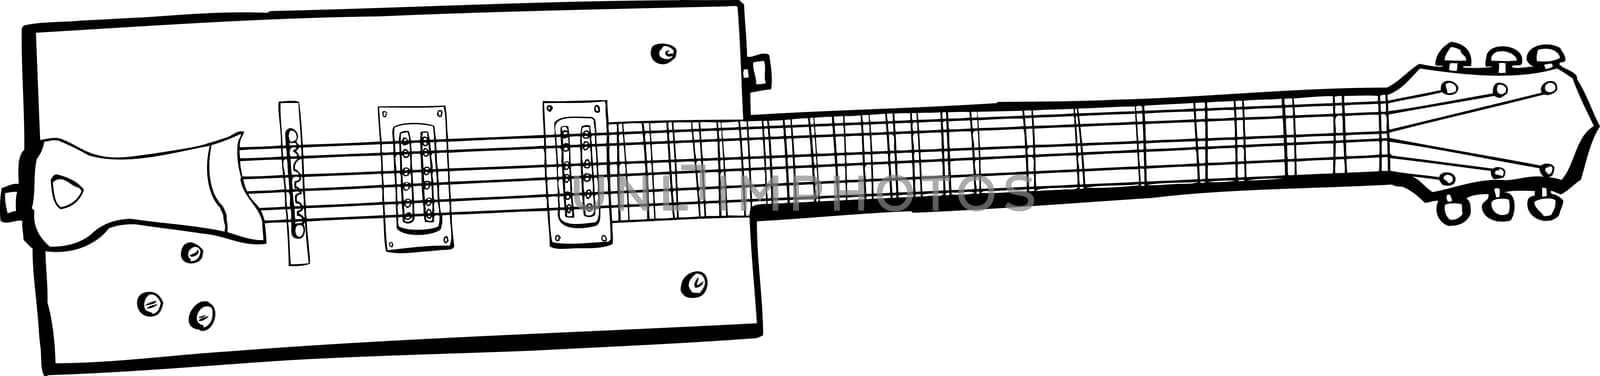 Single Rectangular Electric Guitar by TheBlackRhino